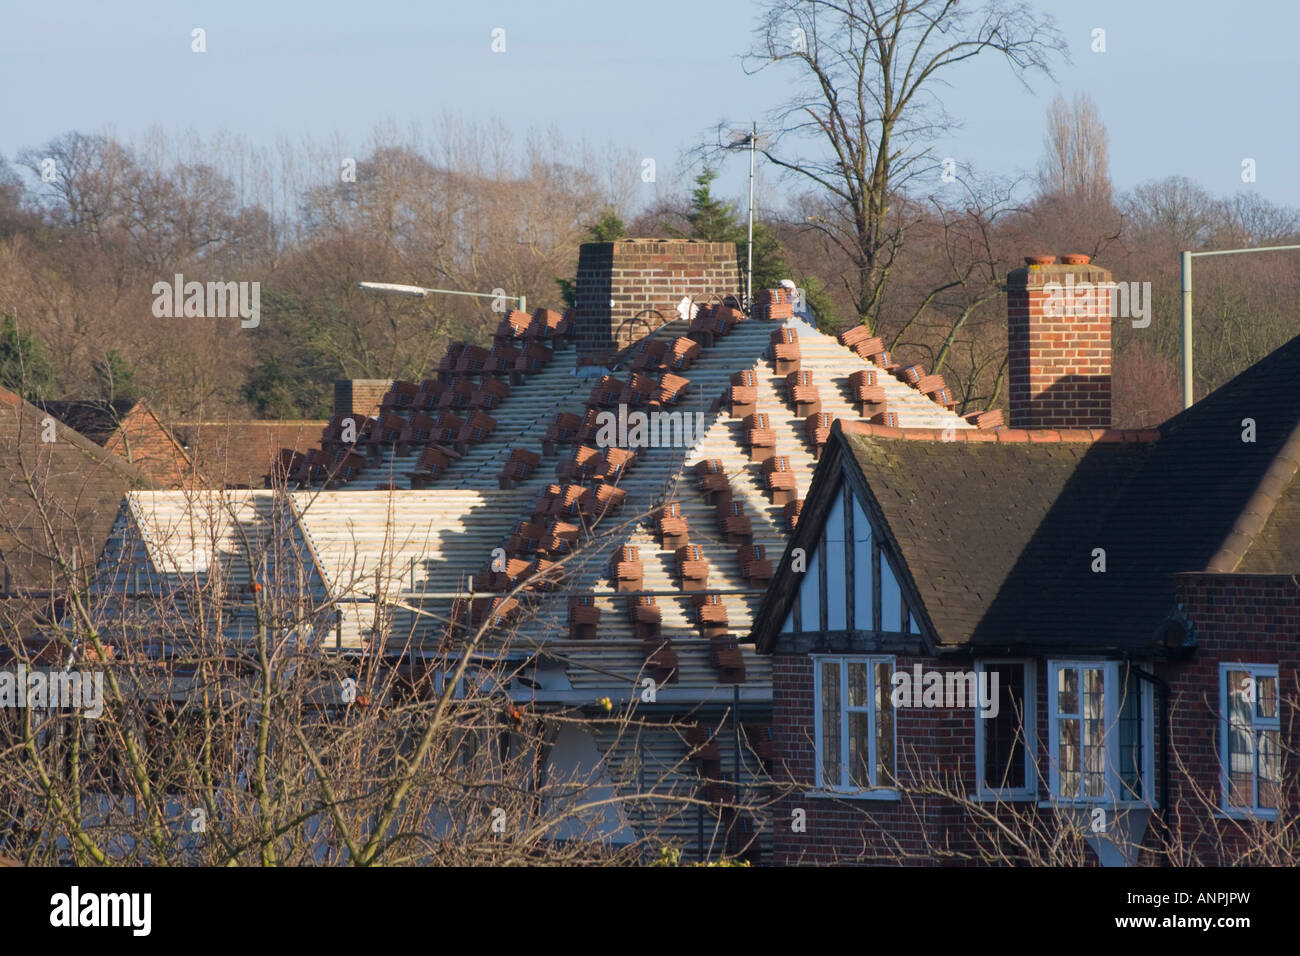 UK house roof tiling new Stock Photo